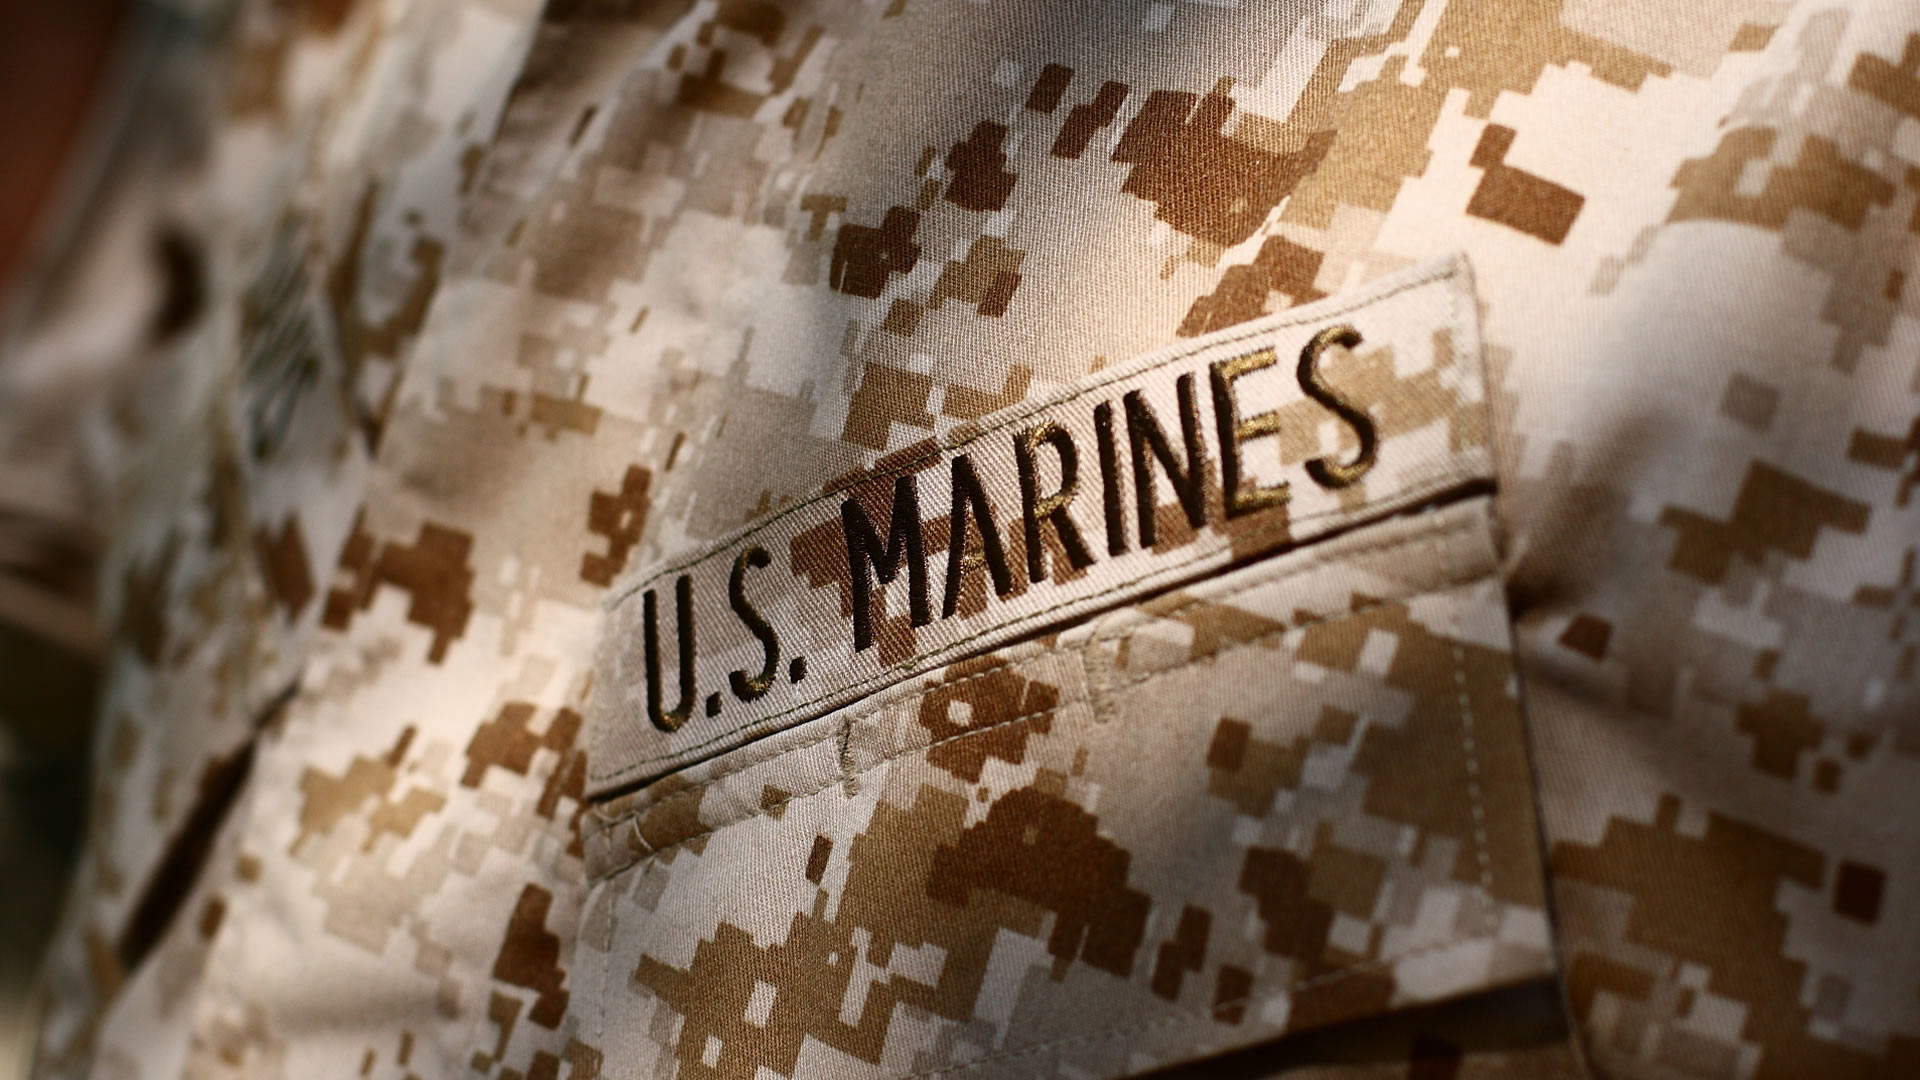 US Marines Uniform Patch